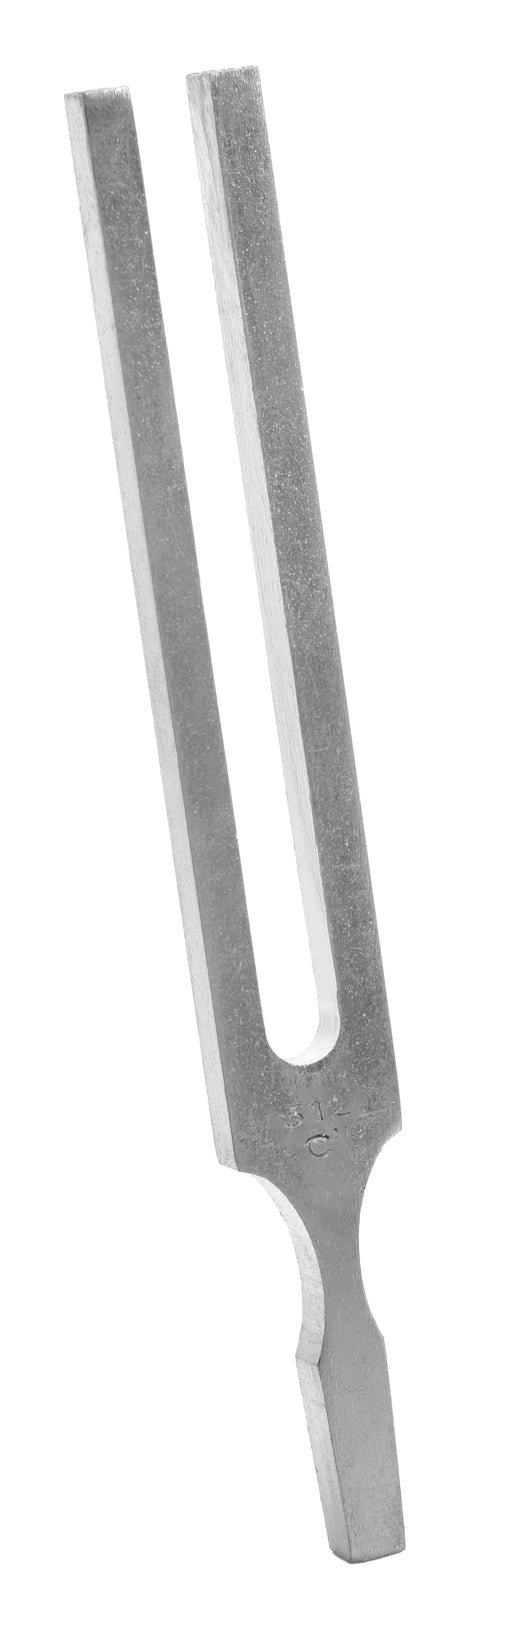 Tuning Fork, 512Hz - C Note - Plain Shanks, Made of Premium Quality Aluminum - Designed for Physics Experimentation - Eisco Labs